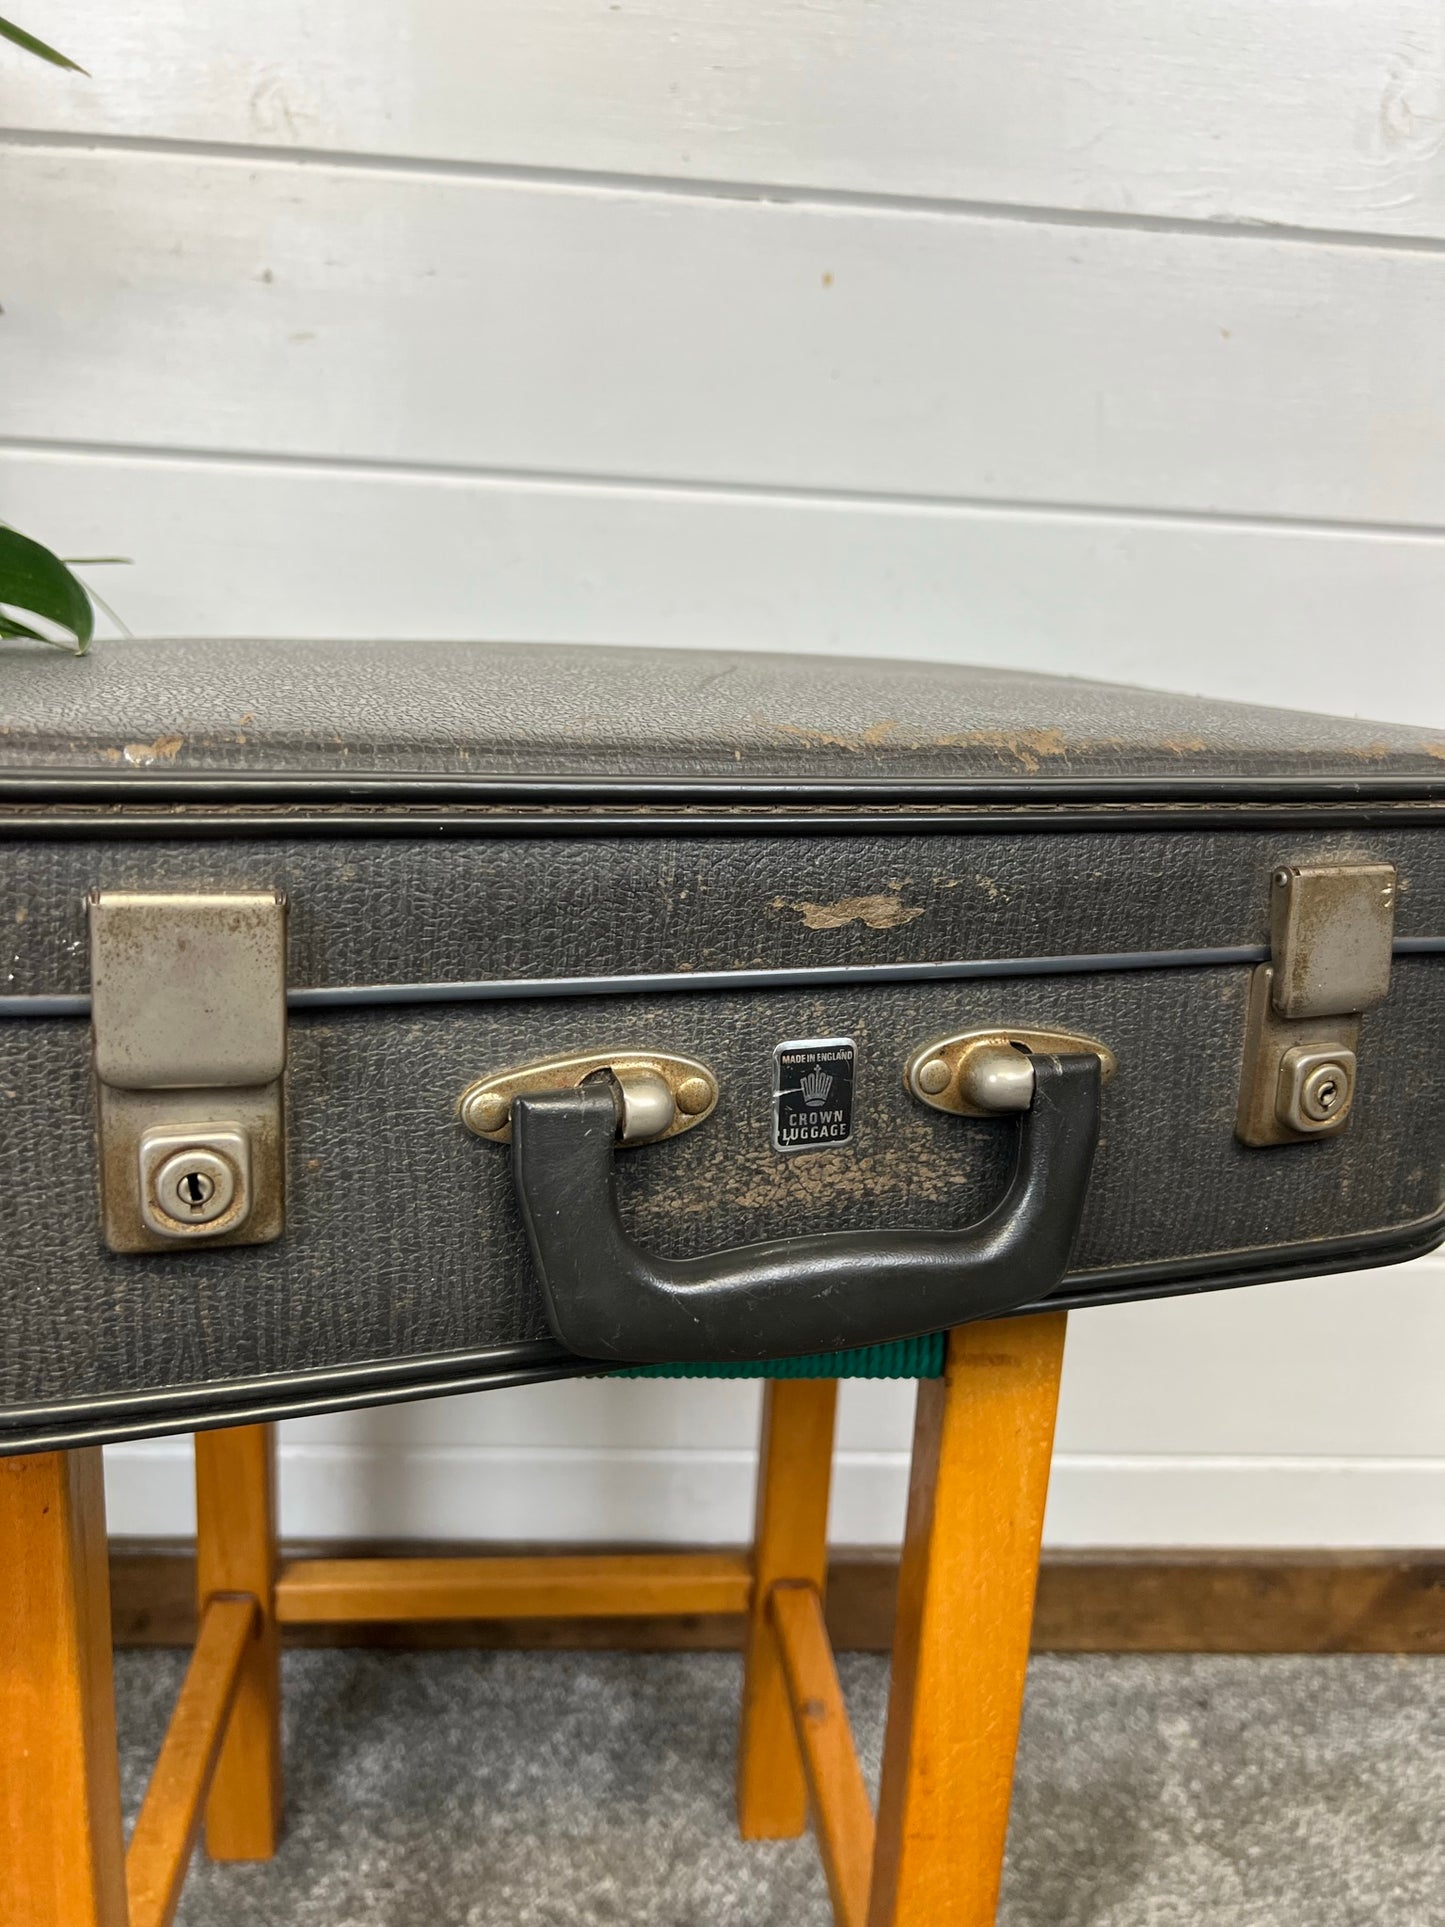 Vintage Crown Luggage Small Suitcase Case 1950's Retro Boho Décor Display